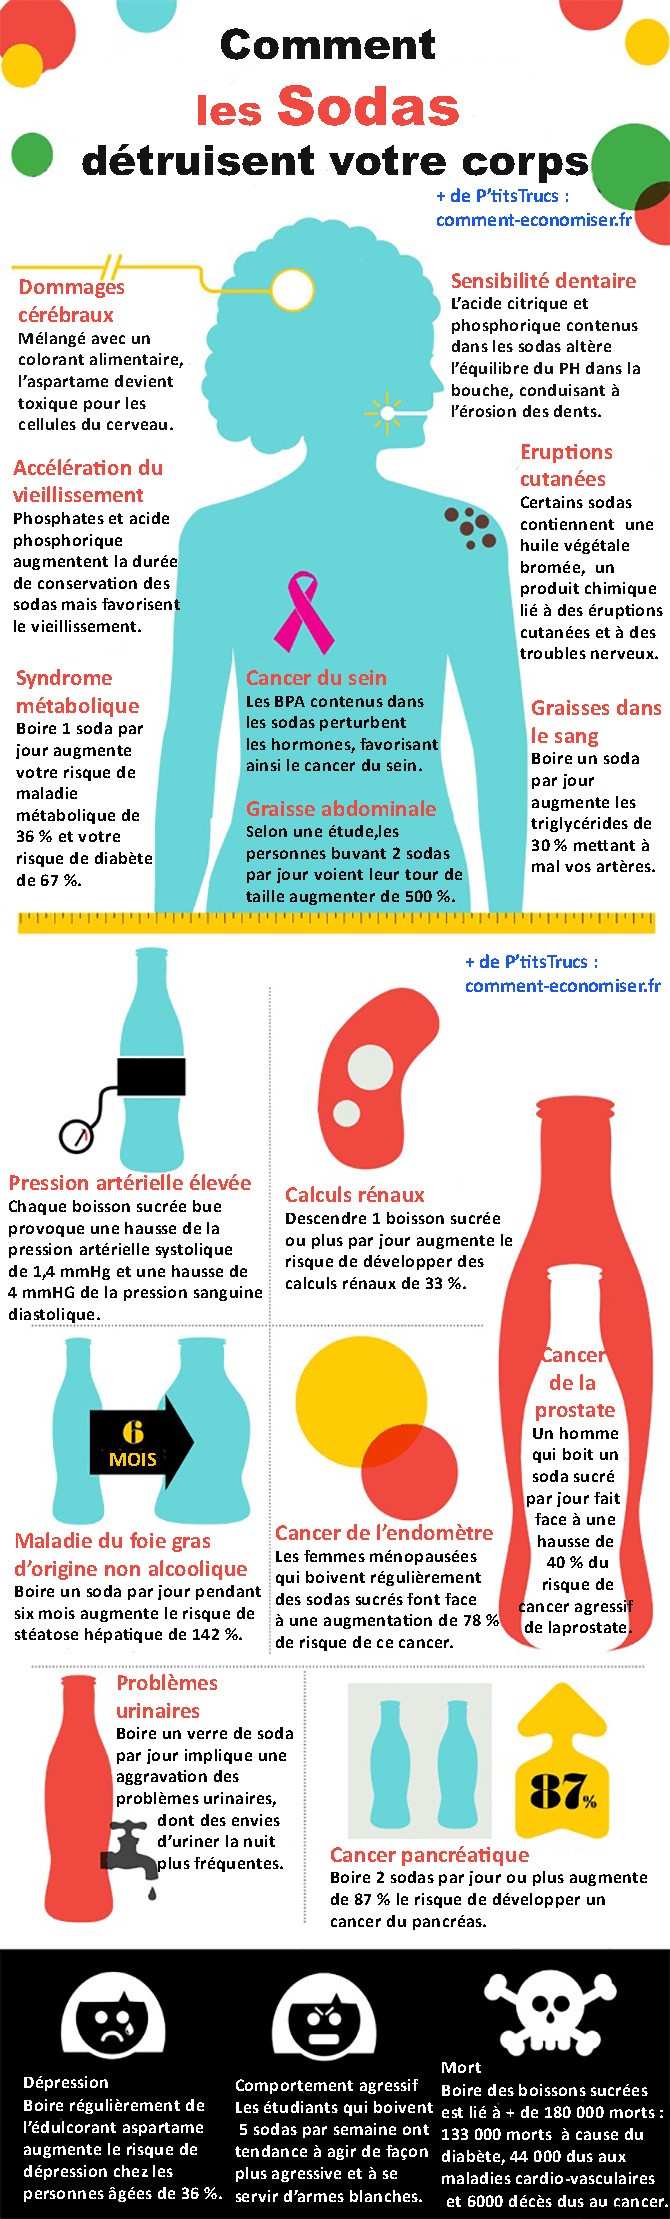 How Sodas DESTROY Your Body. 